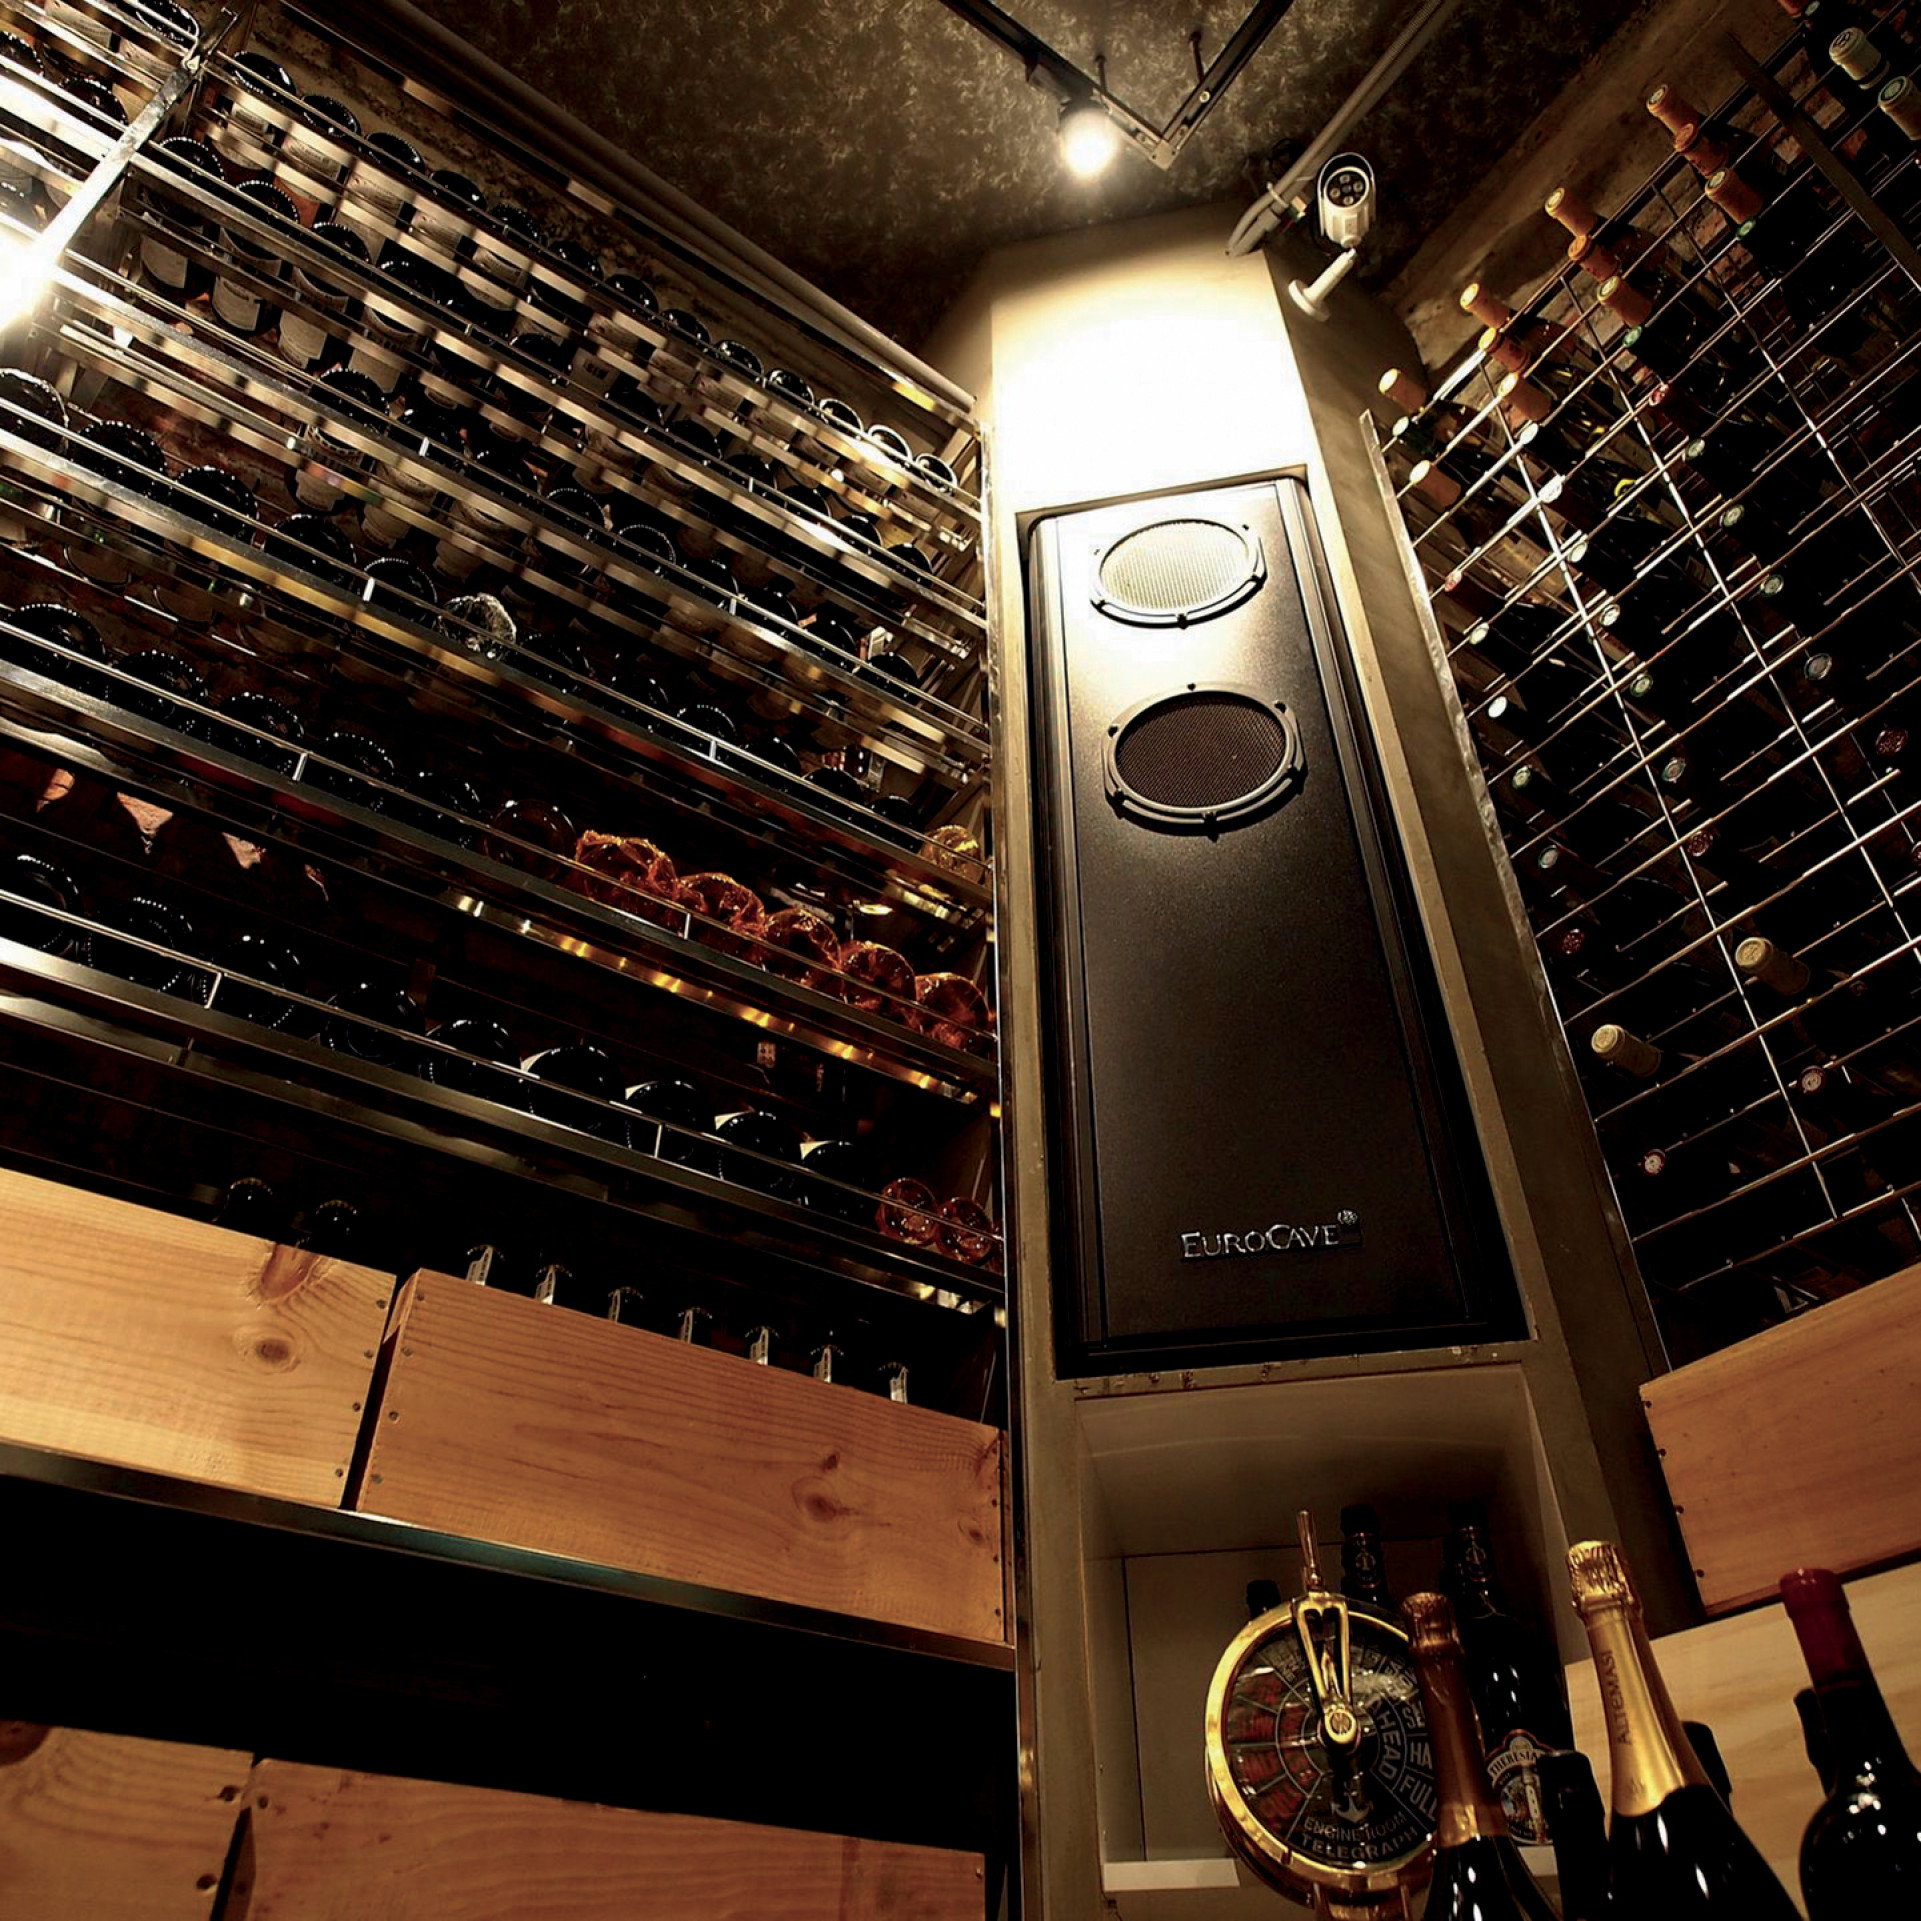  EuroCave’s cellar conditioner ensures a constant temperature and preserves humidity.